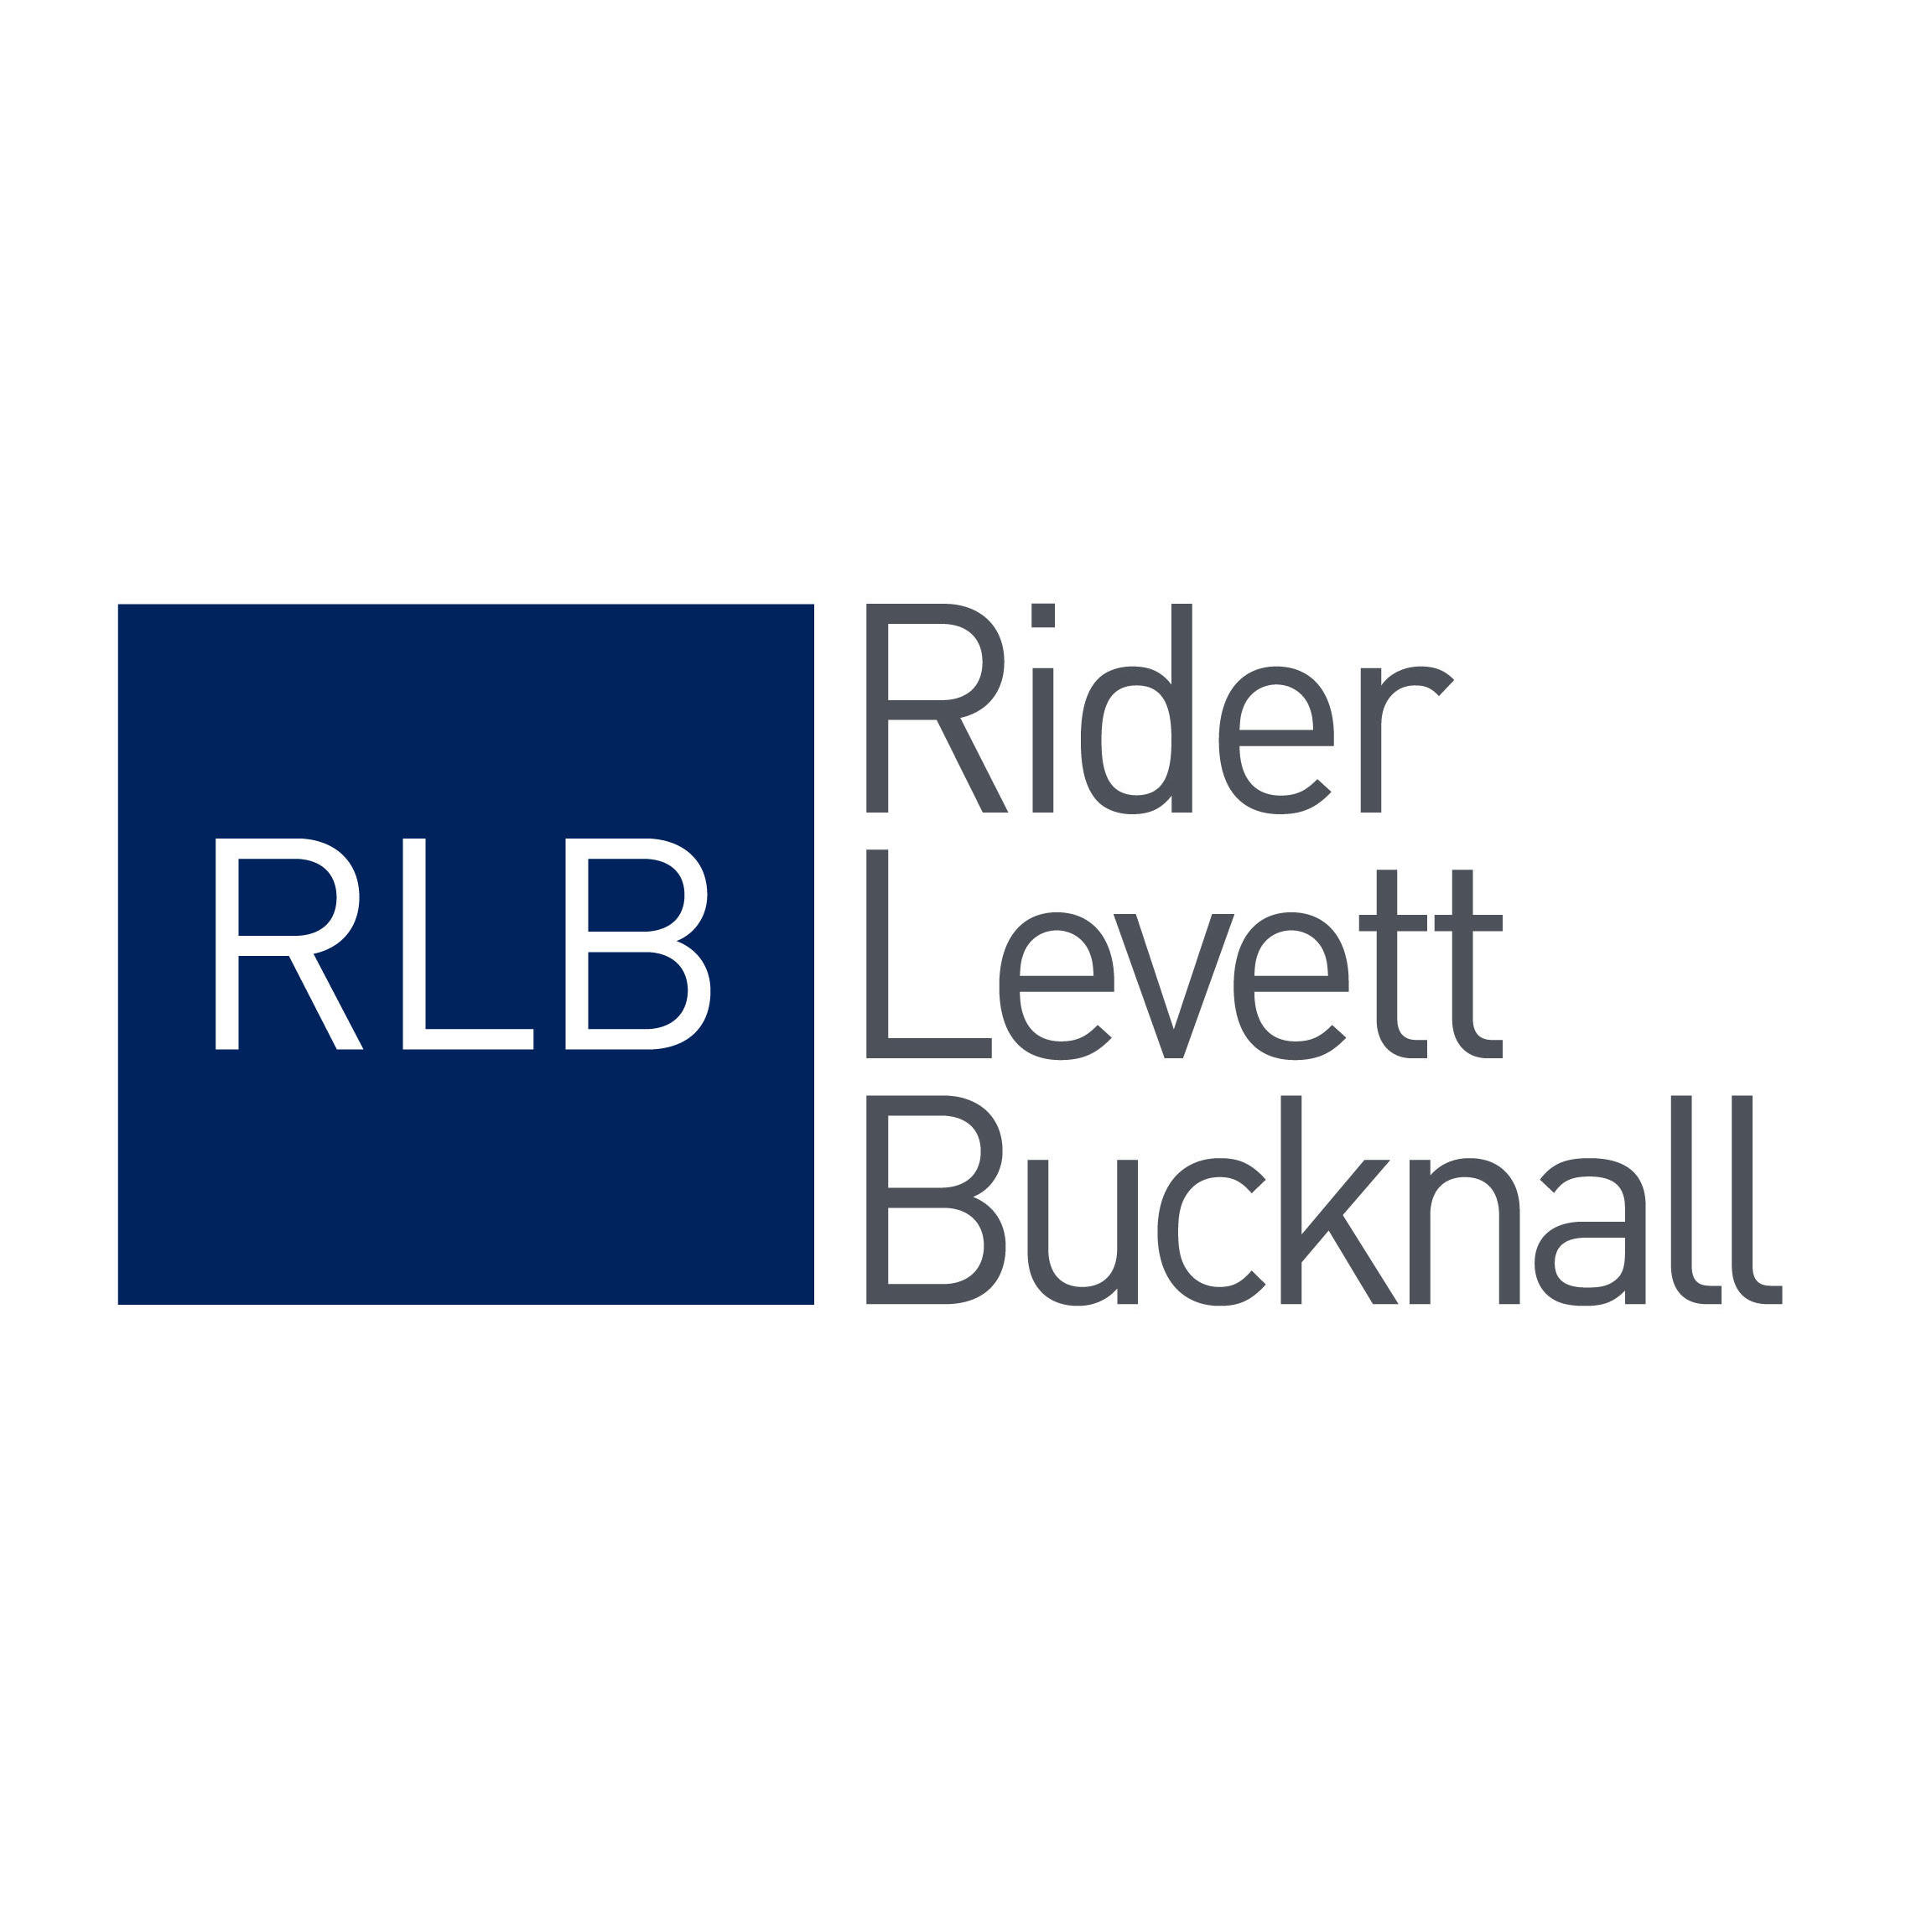 Rider Levett Bucknall - Wickham, NSW 2293 - (02) 4940 0000 | ShowMeLocal.com